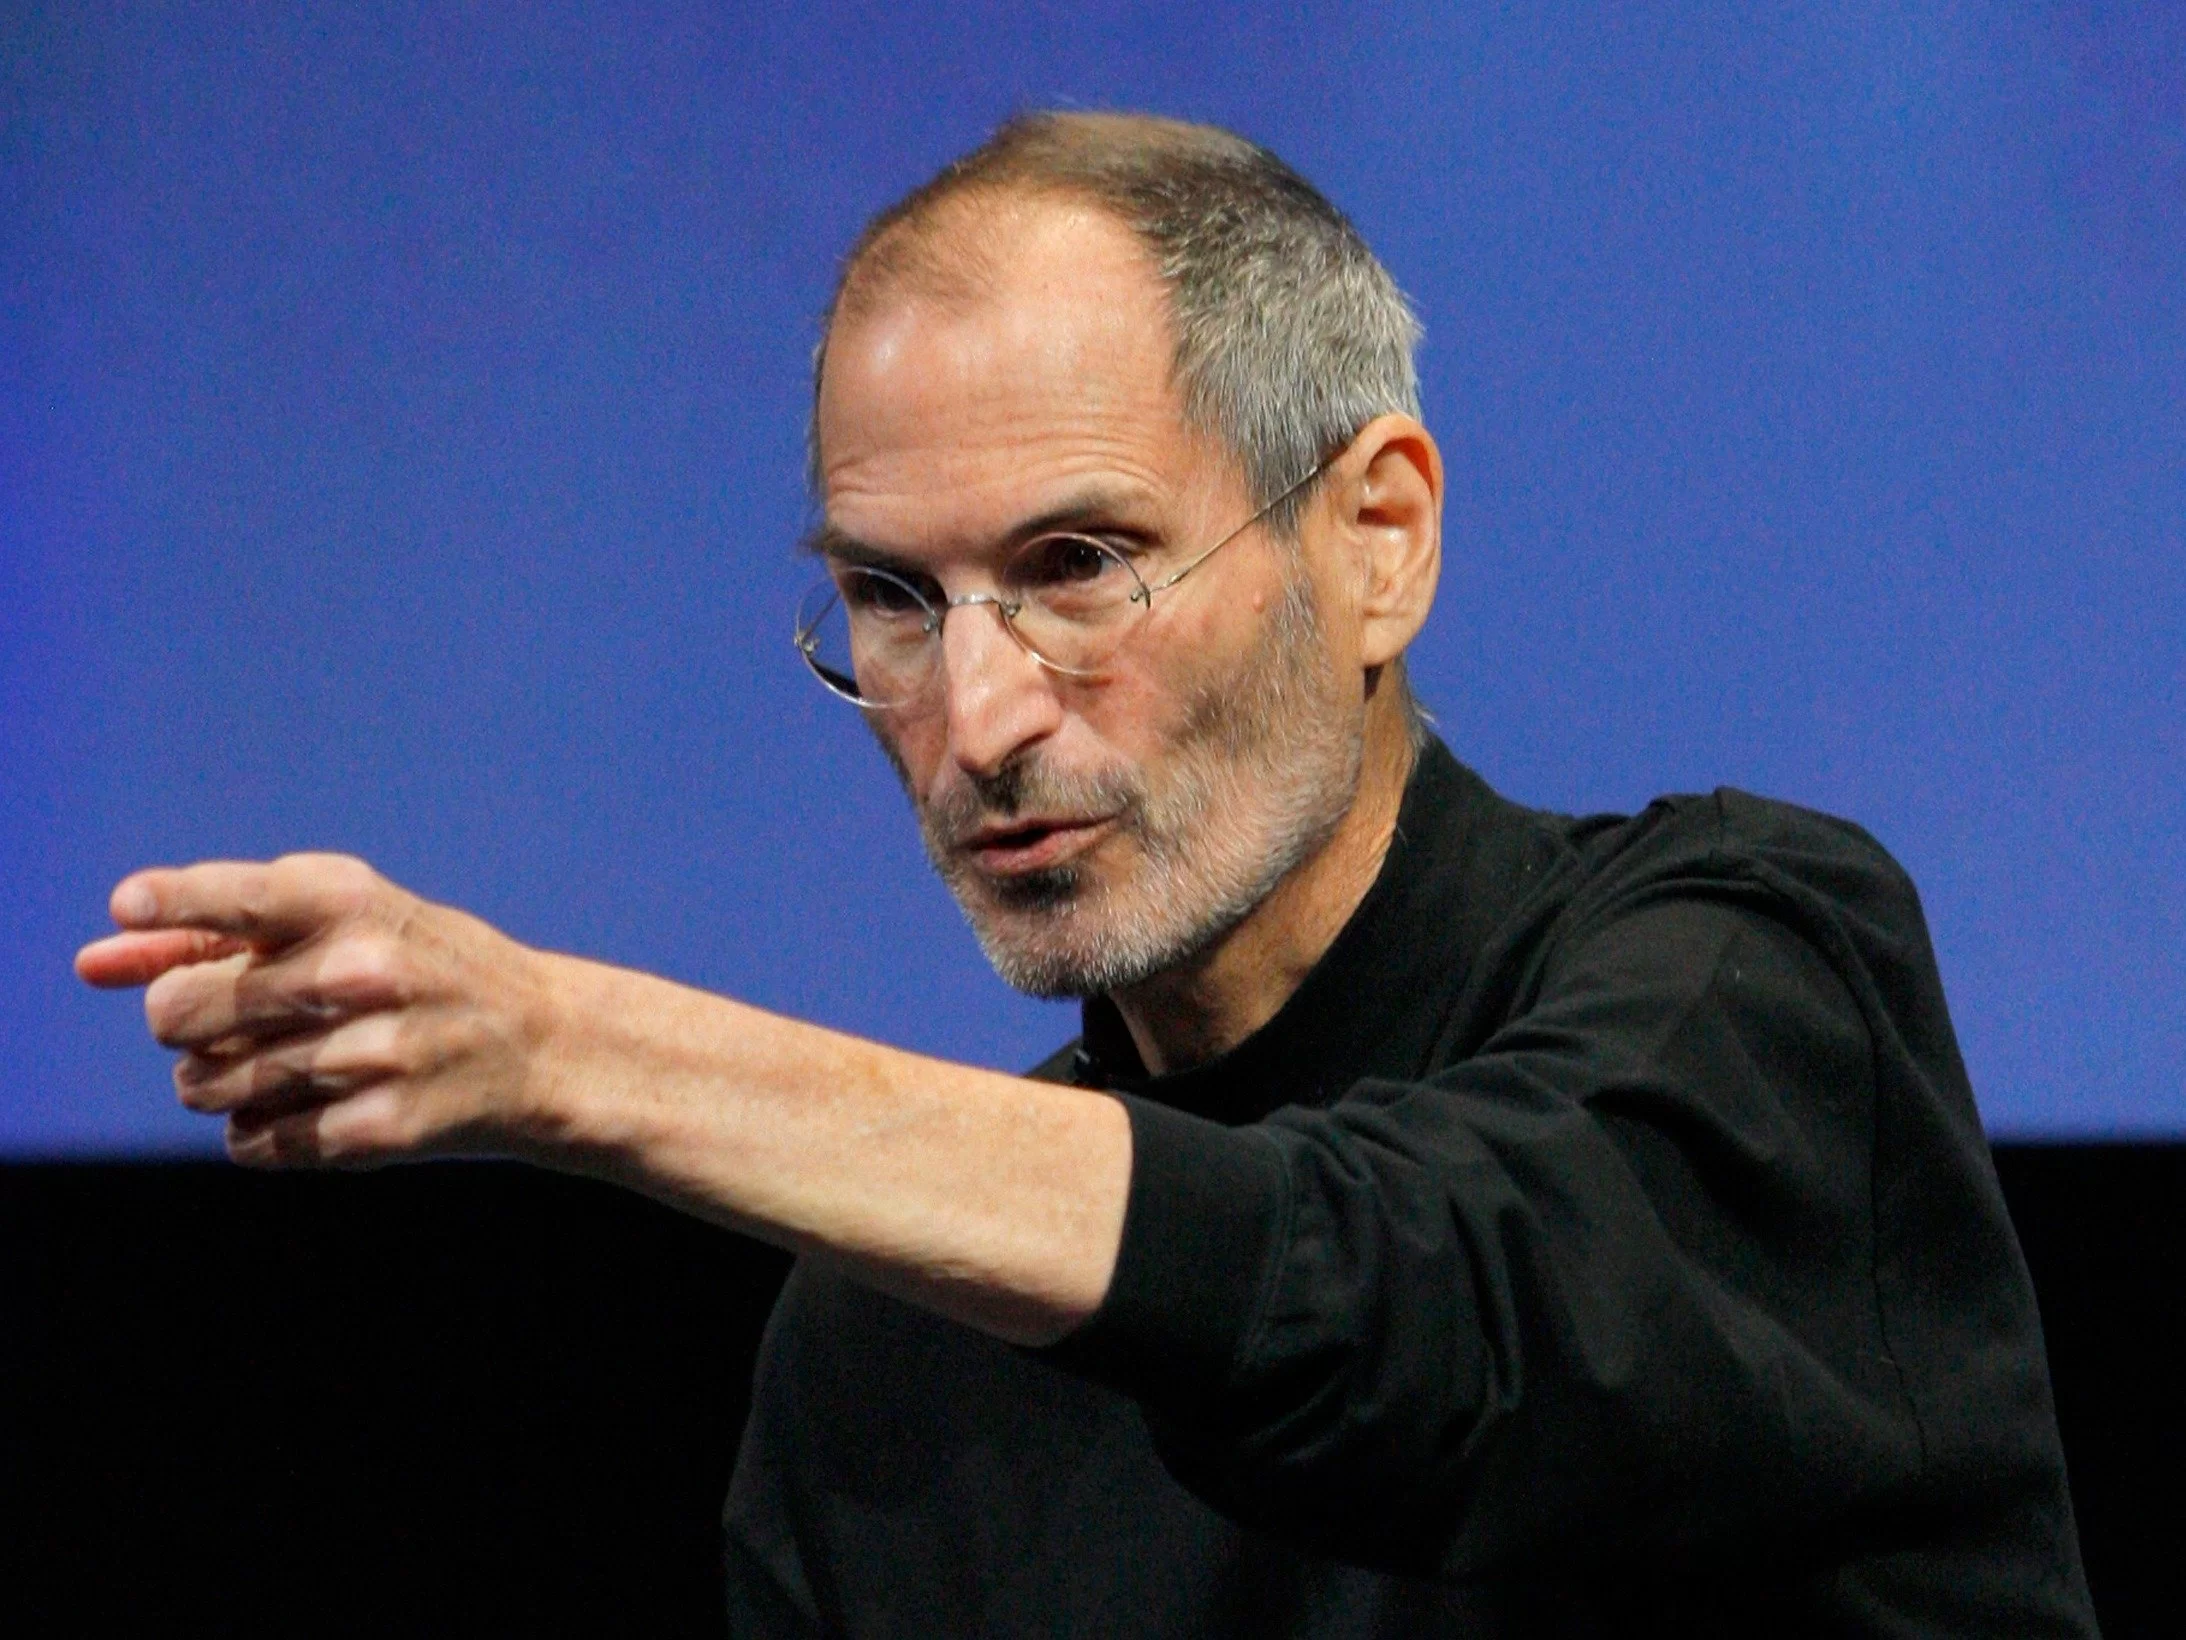 rtr2cktq | technique | 3 เทคนิคการประชุมดีๆของ Steve Jobs ที่ทำให้บริษัทประสบความสำเร็จ